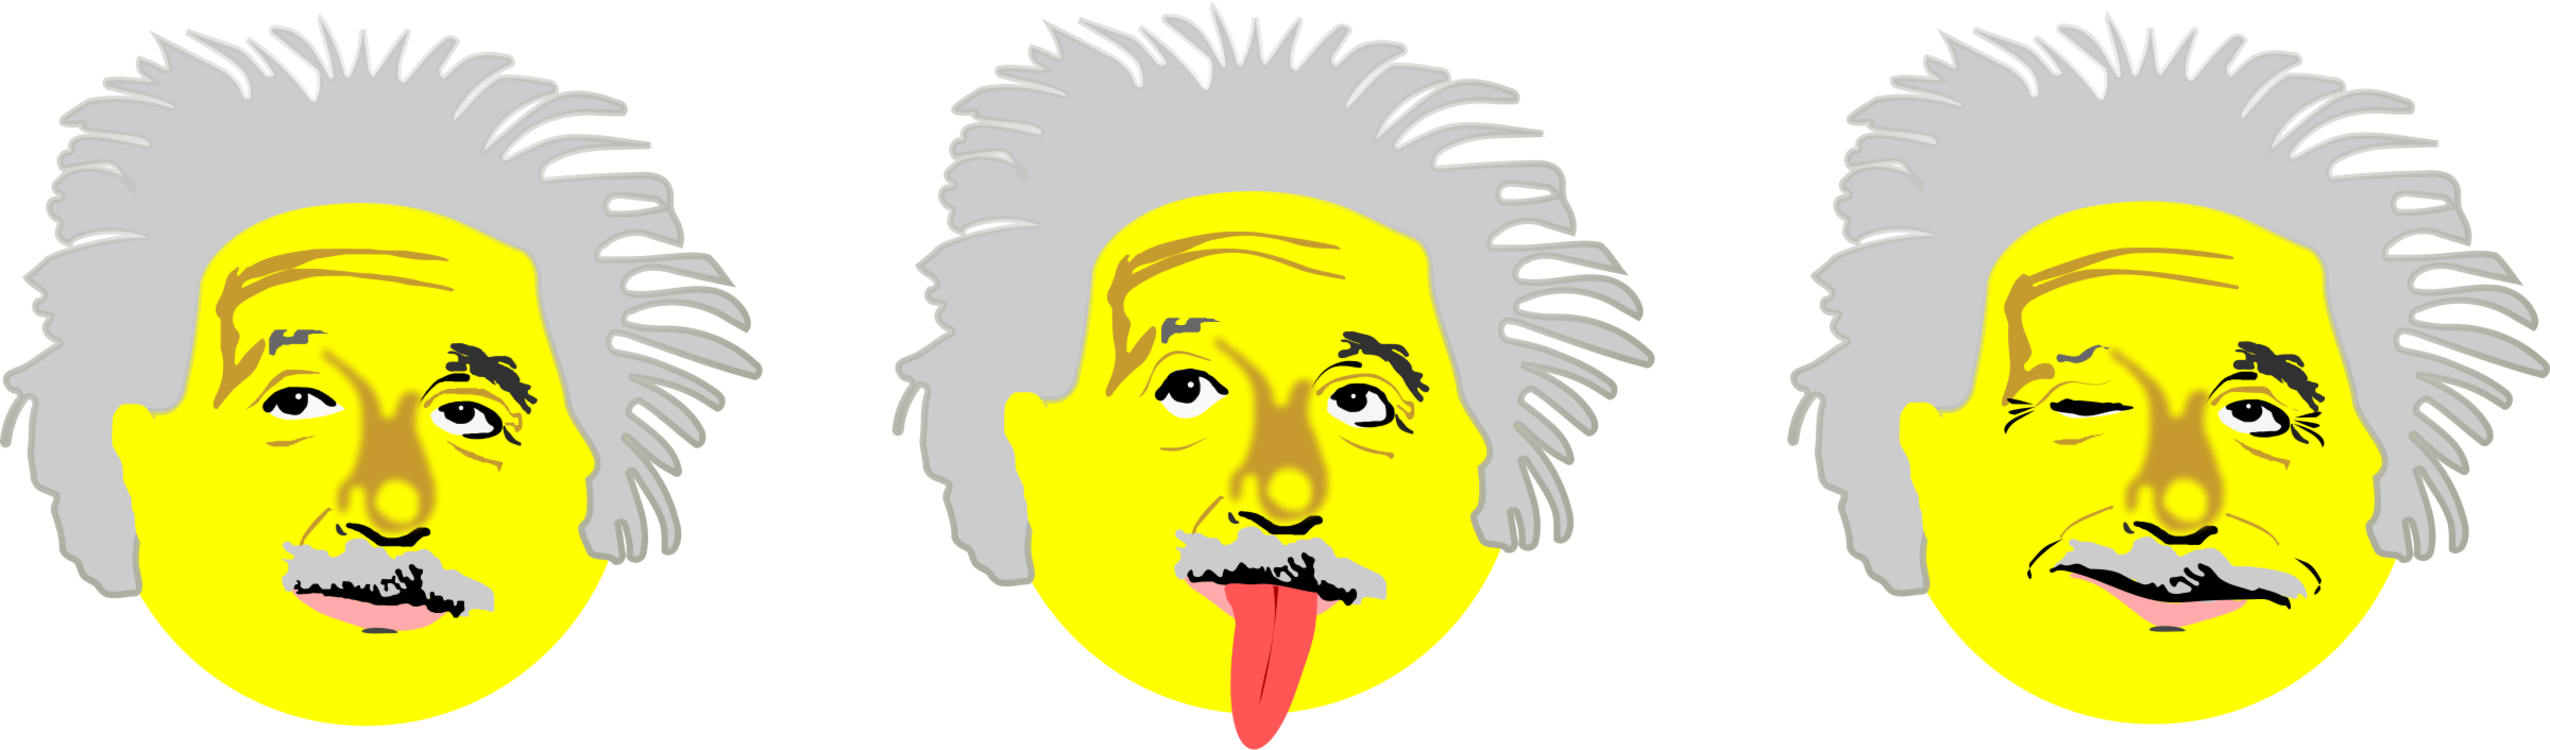 Drawing Albert Einstein Face Cartoon Horse Illustration